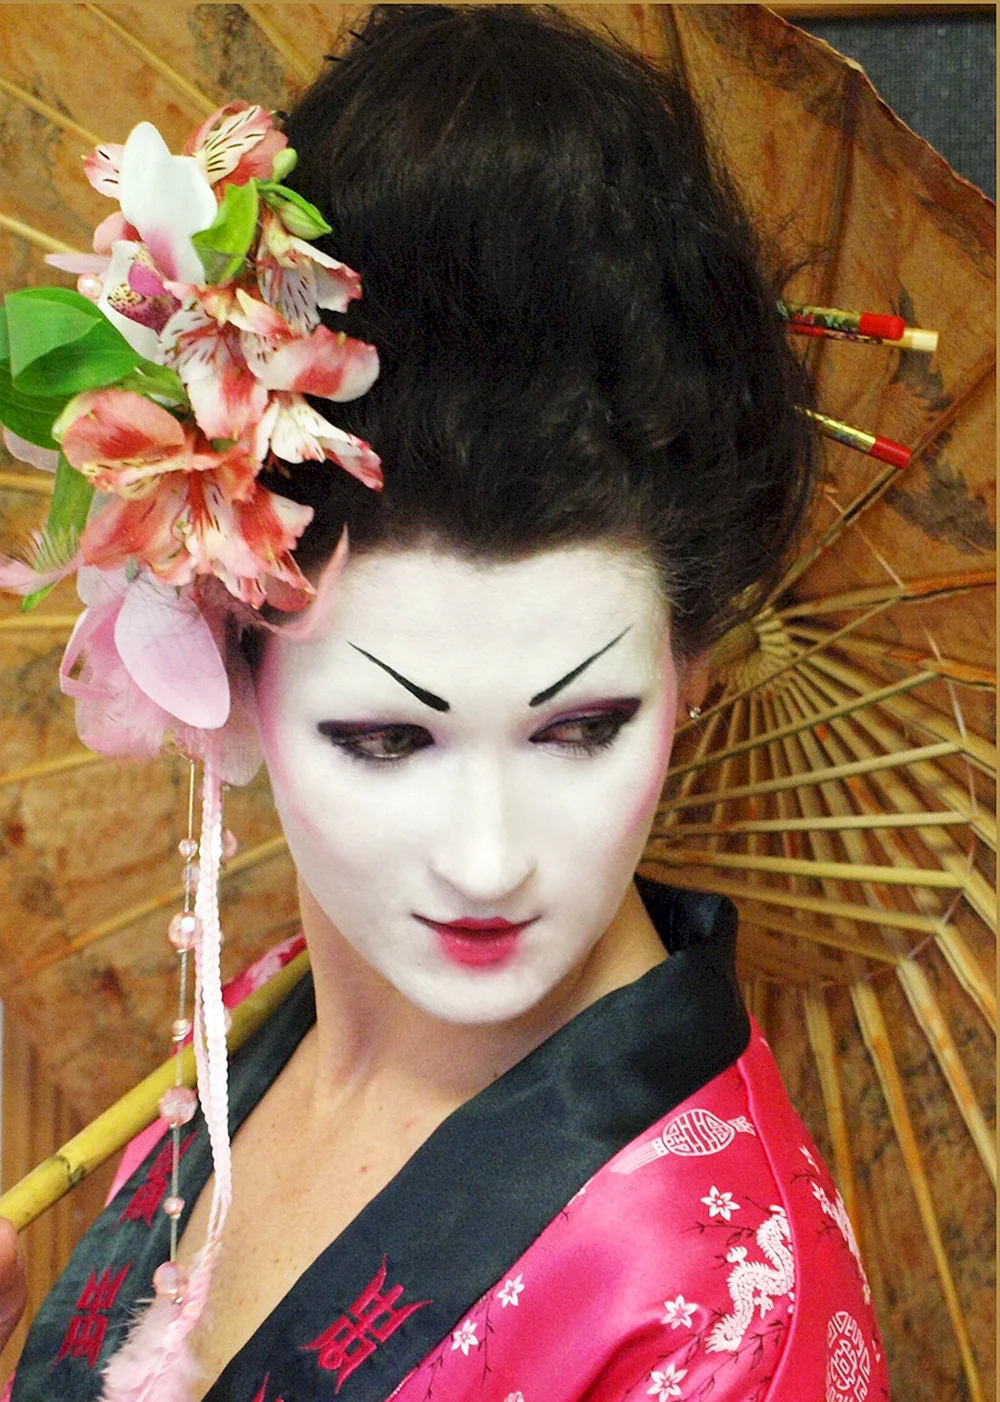 Geisha Hairstyle